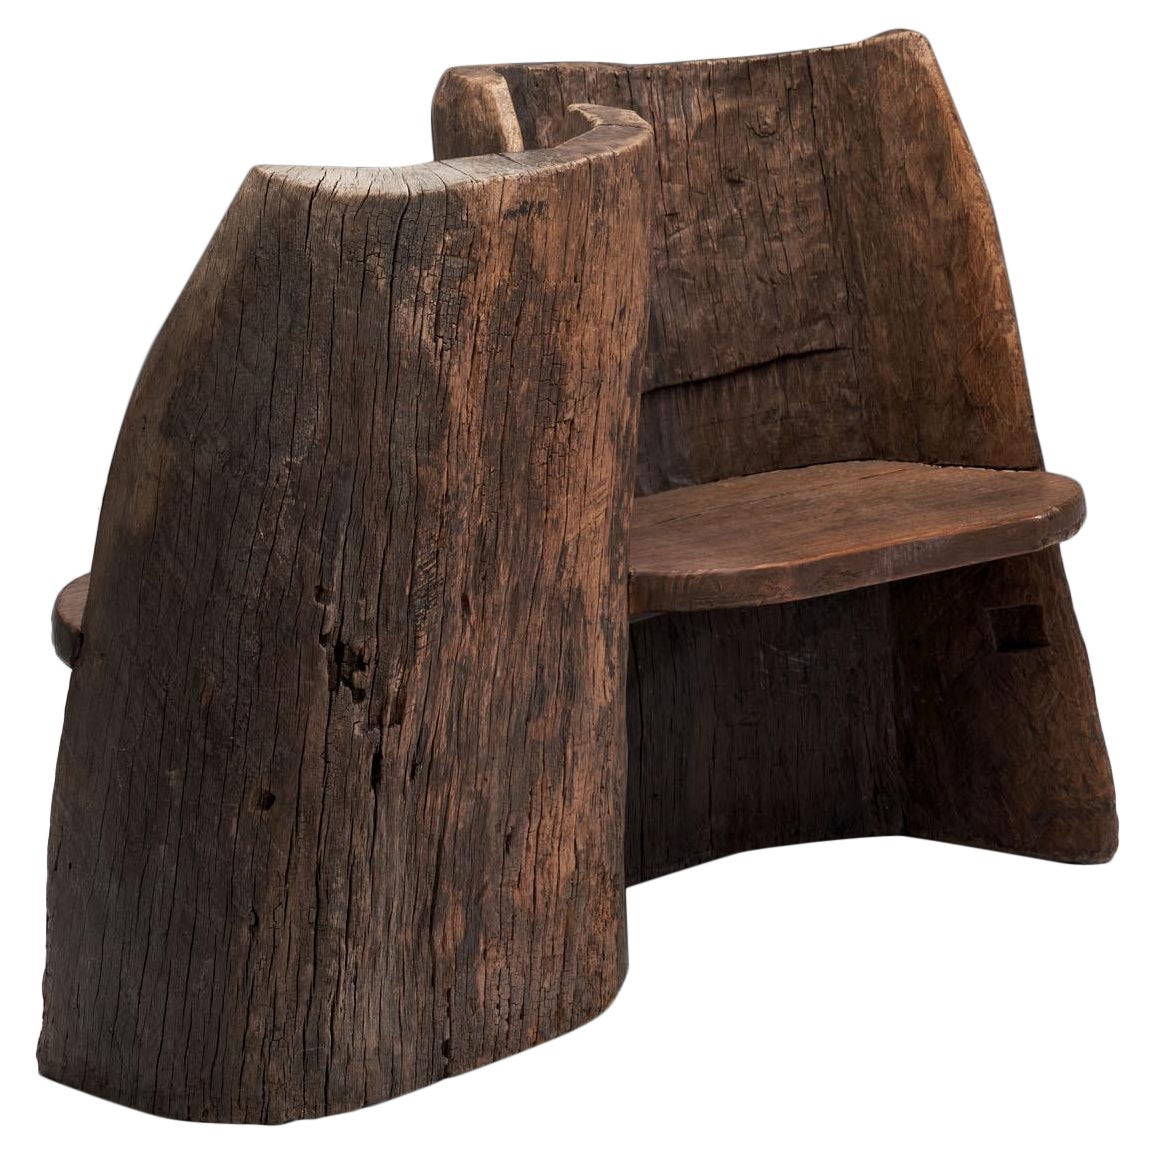 Tibetan Carved Wood “Tête a Tête” Love Seat, Tibet 19th Century